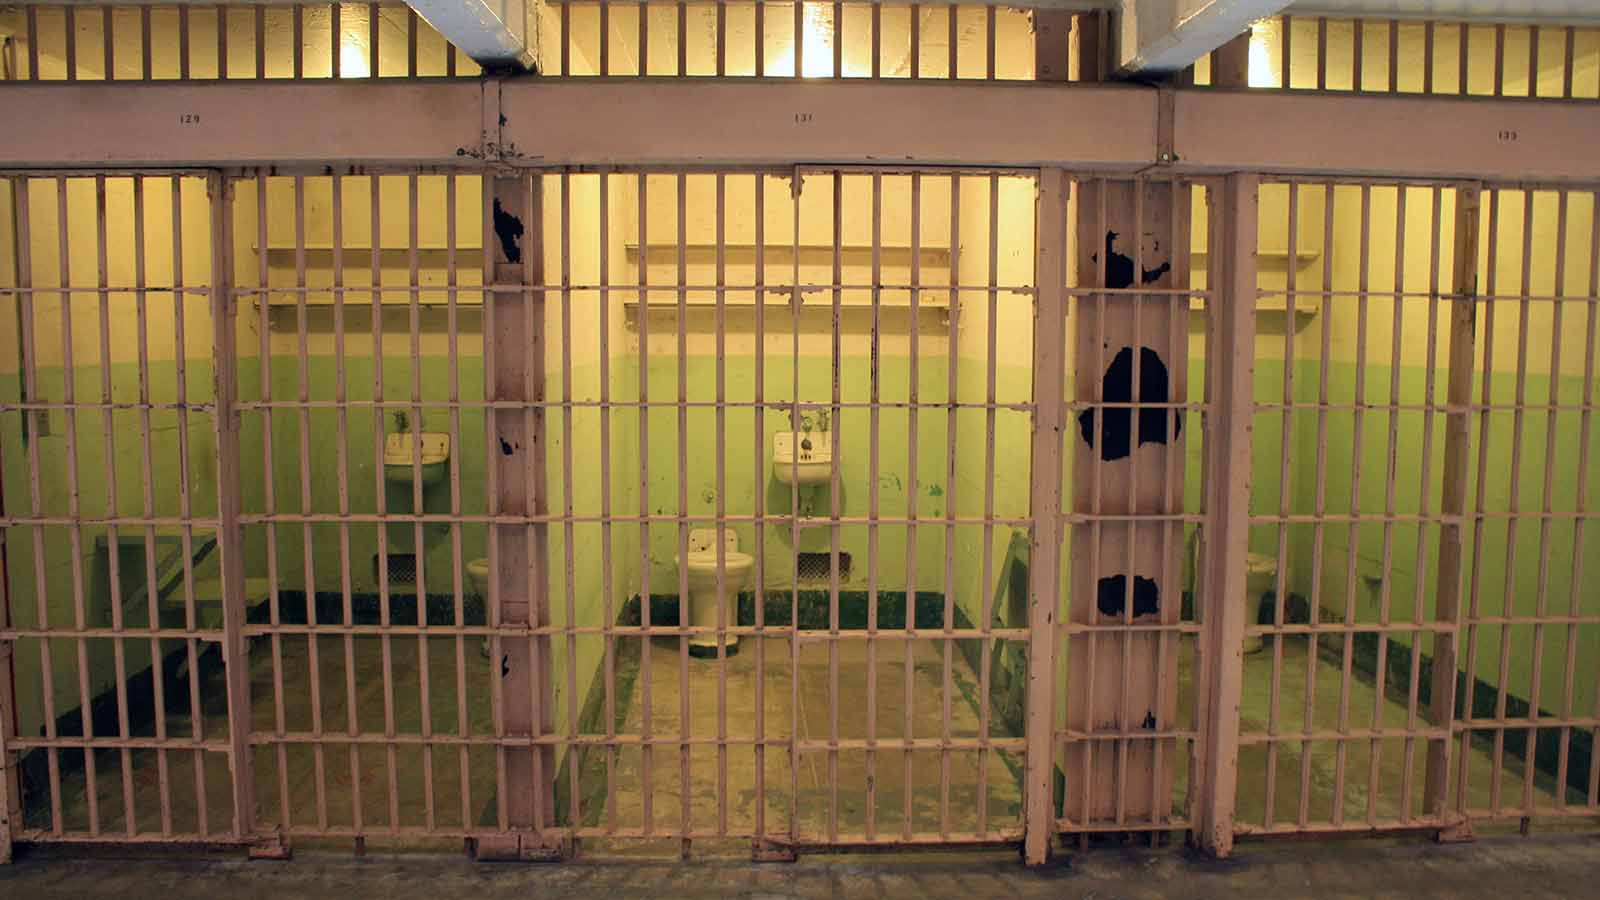 https://freethepeople.org/wp-content/uploads/2016/06/3-prison-cells.jpg